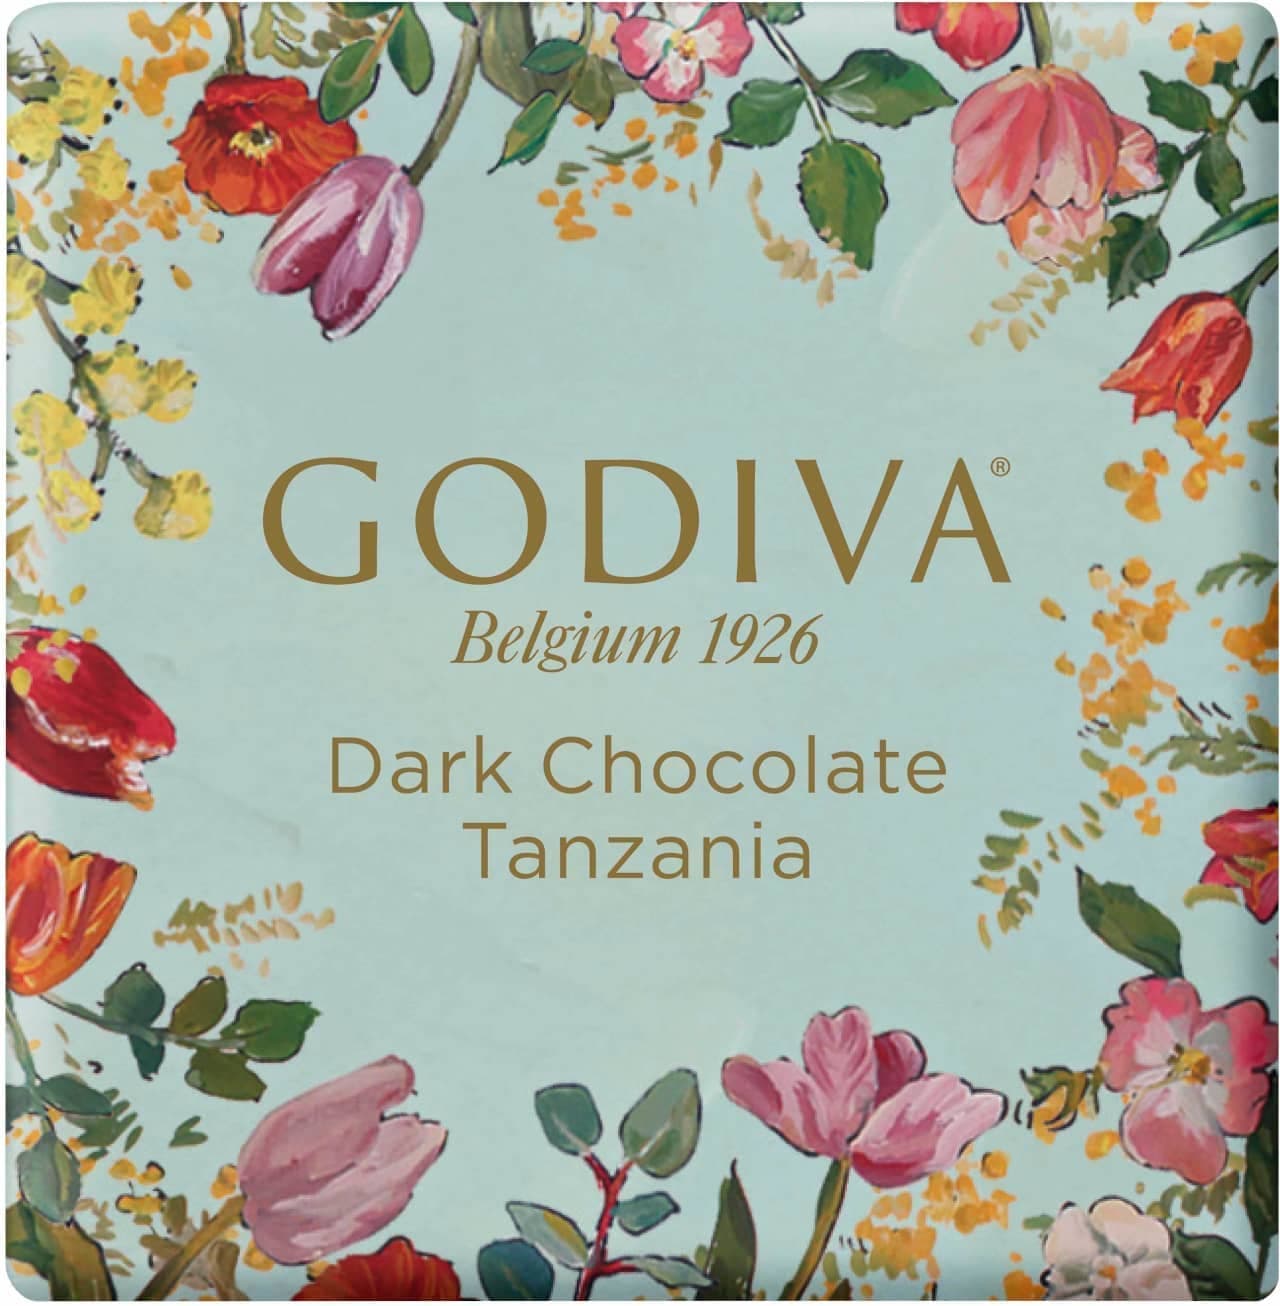 Godiva "Blooming Spring Chocolate & Flower Set".